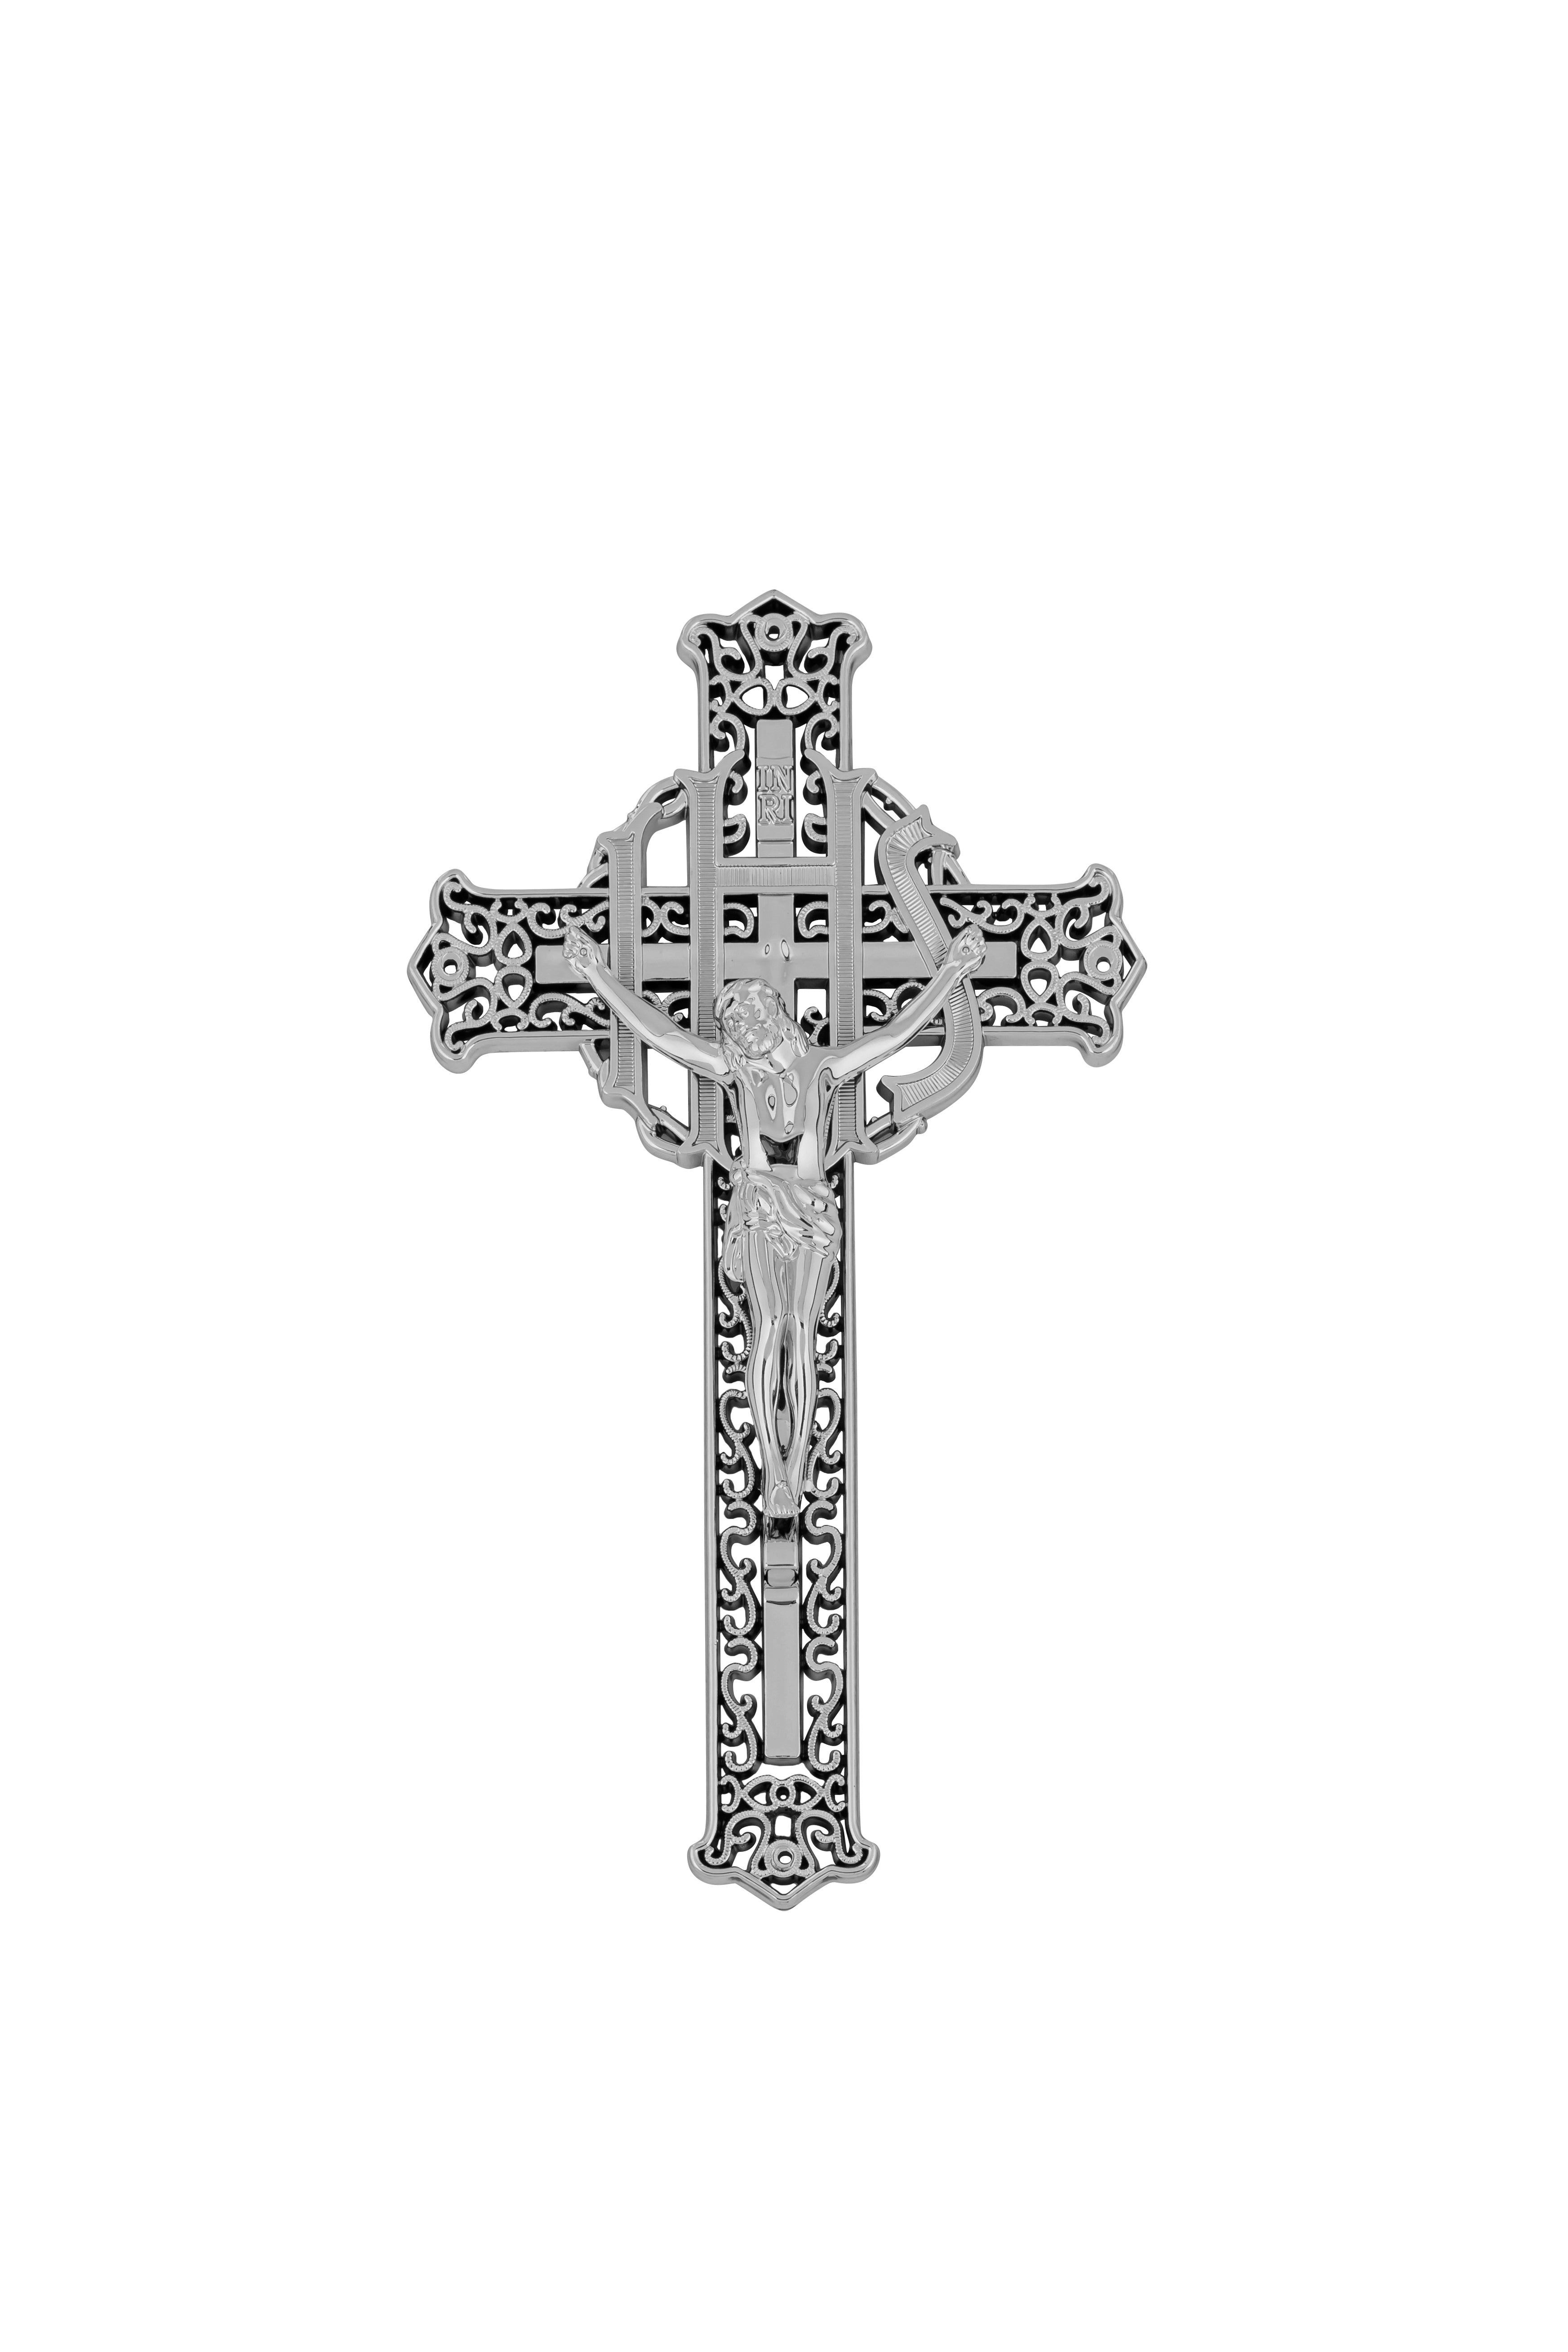 8 inch Plastic Filagree Crucifix Nickel